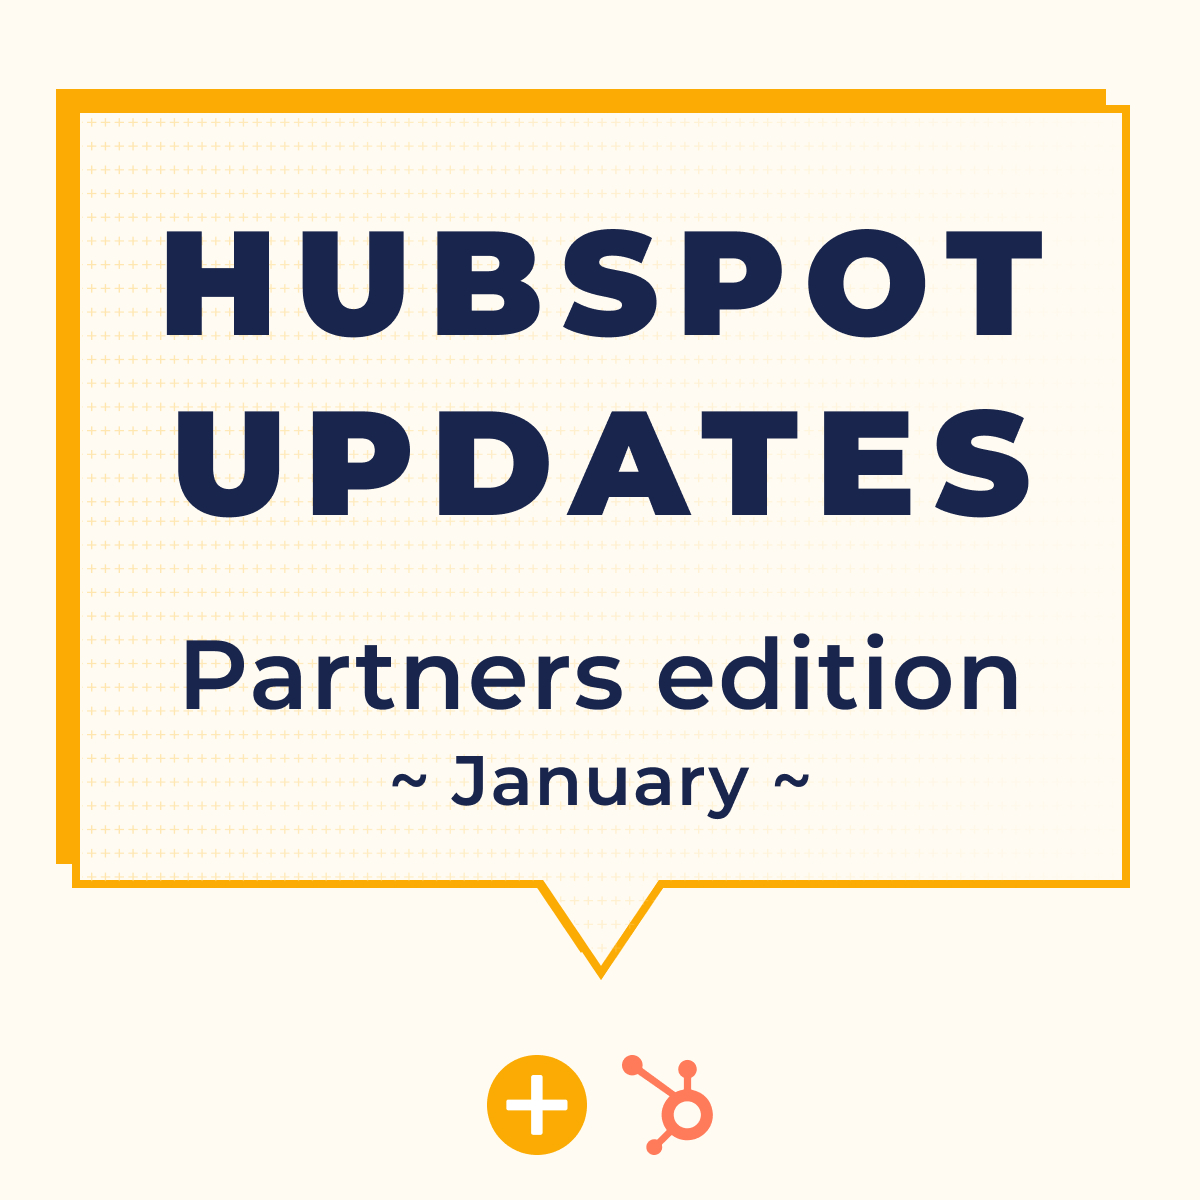 HUBSPOT UPDATES Partners edition (2)